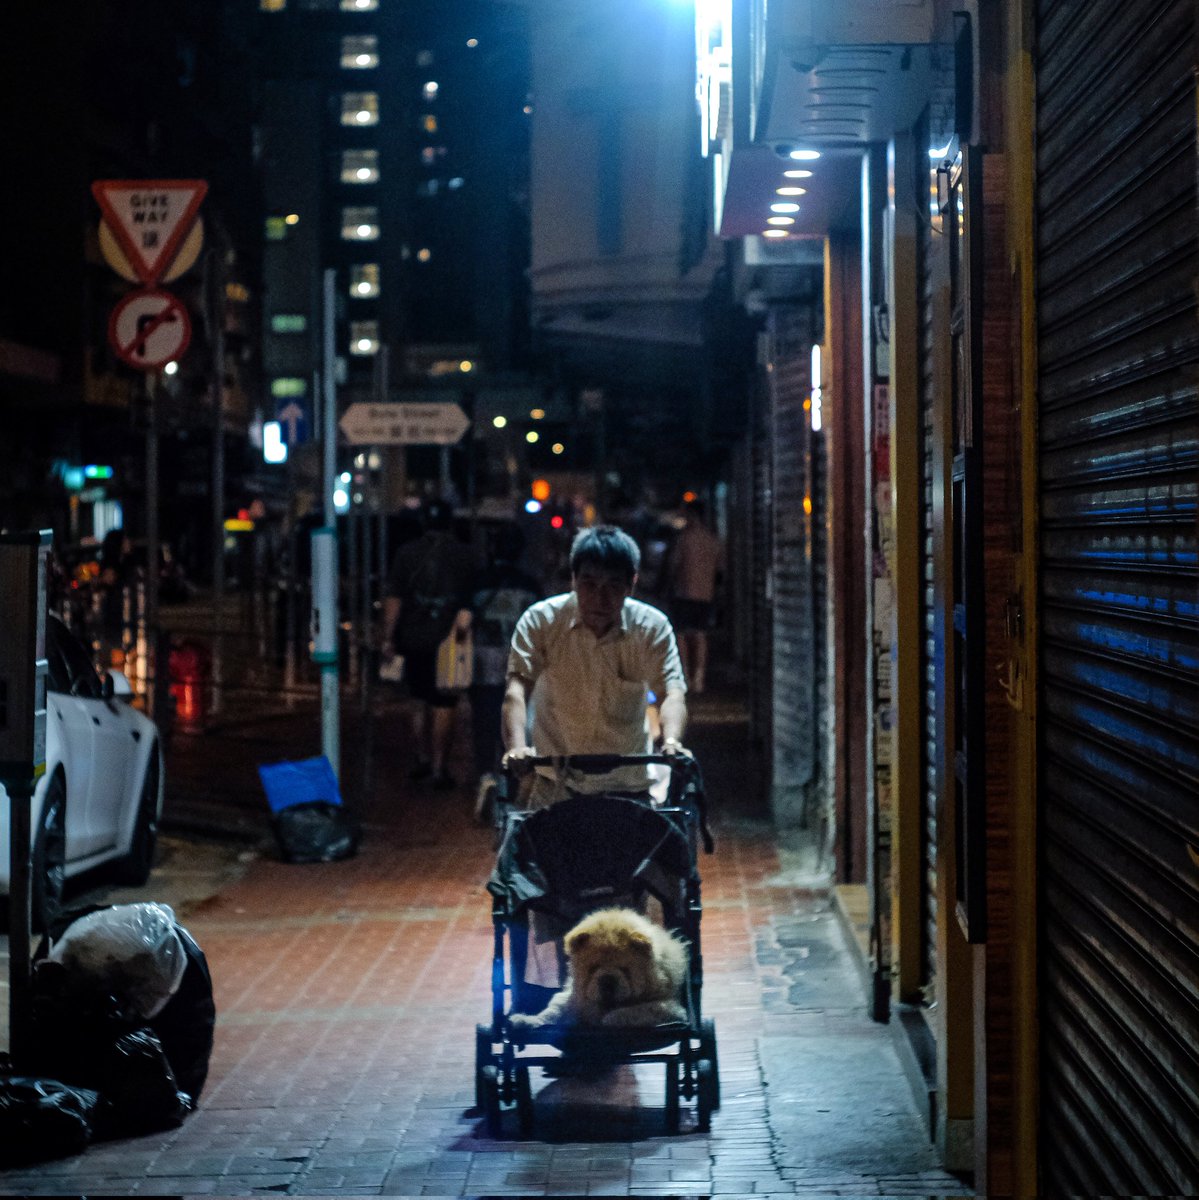 furkids in stroller ...🐶#hkig #furkids #petstroller #discoveryhongkong #instapet #streetphotography #chowchow #hongkonginsta #under_the_sign_hongkong #hkiger #nightshot #hongkonglifestyle #citylife #nightwalk #夜行 #walkalone